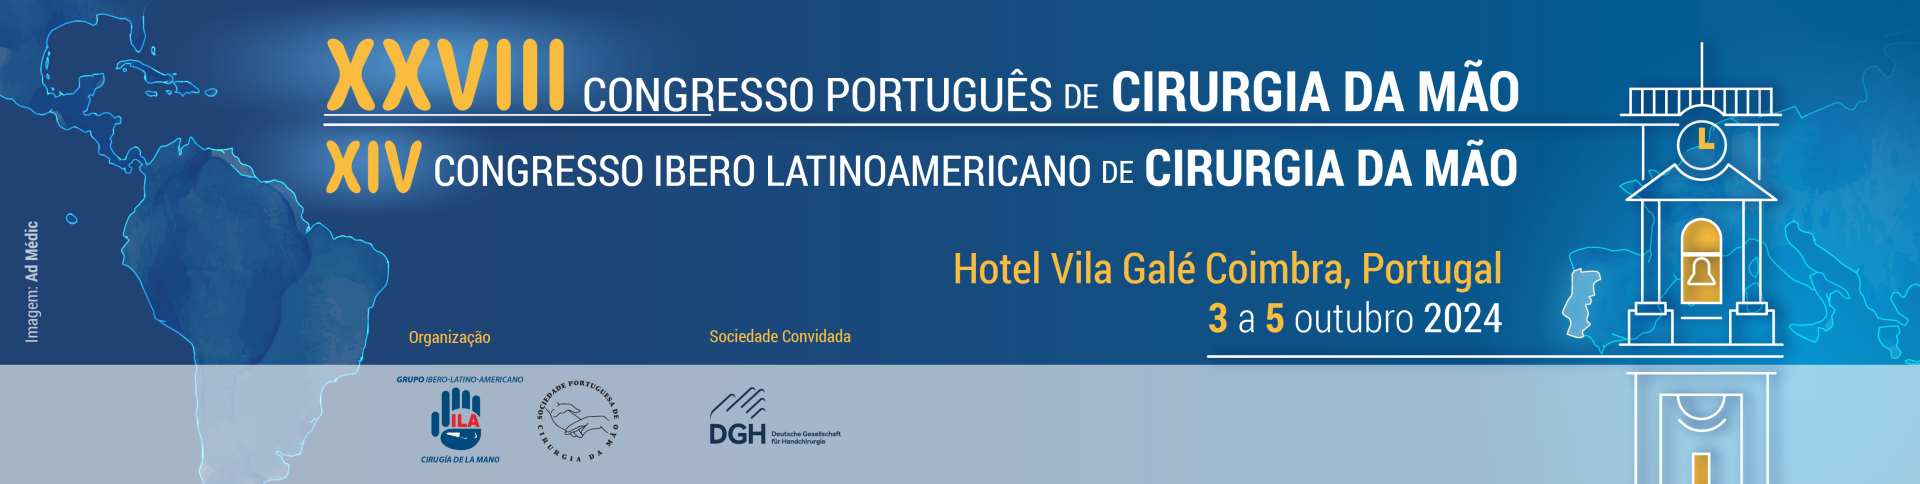 XXVIII Congresso Portugus de Cirurgia da Mo | XIV Congresso Ibero Latino Americano de Cirurgia da Mo